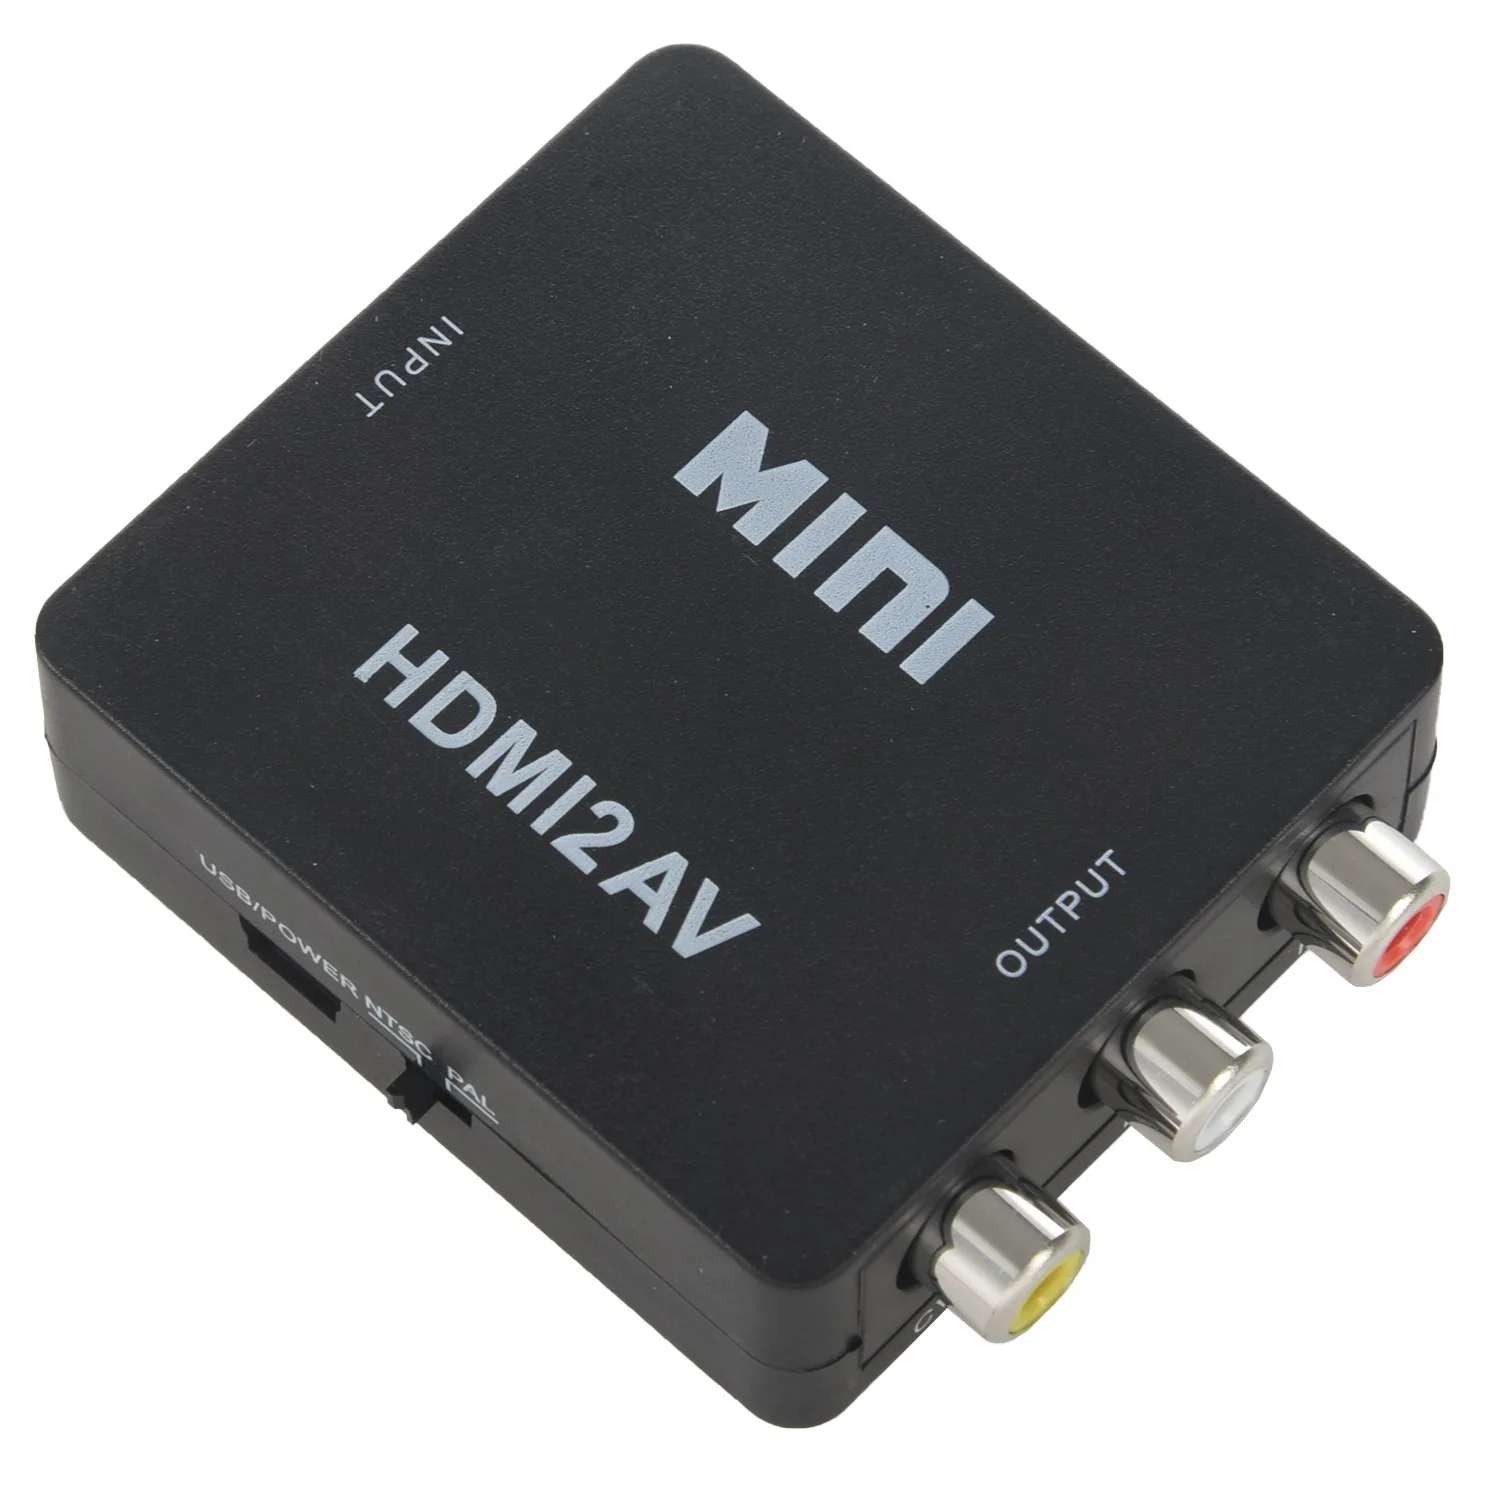 

Mini 1080P HDMI Composite to RCA Audio Video AV CVBS Converter Adapter For HDTV